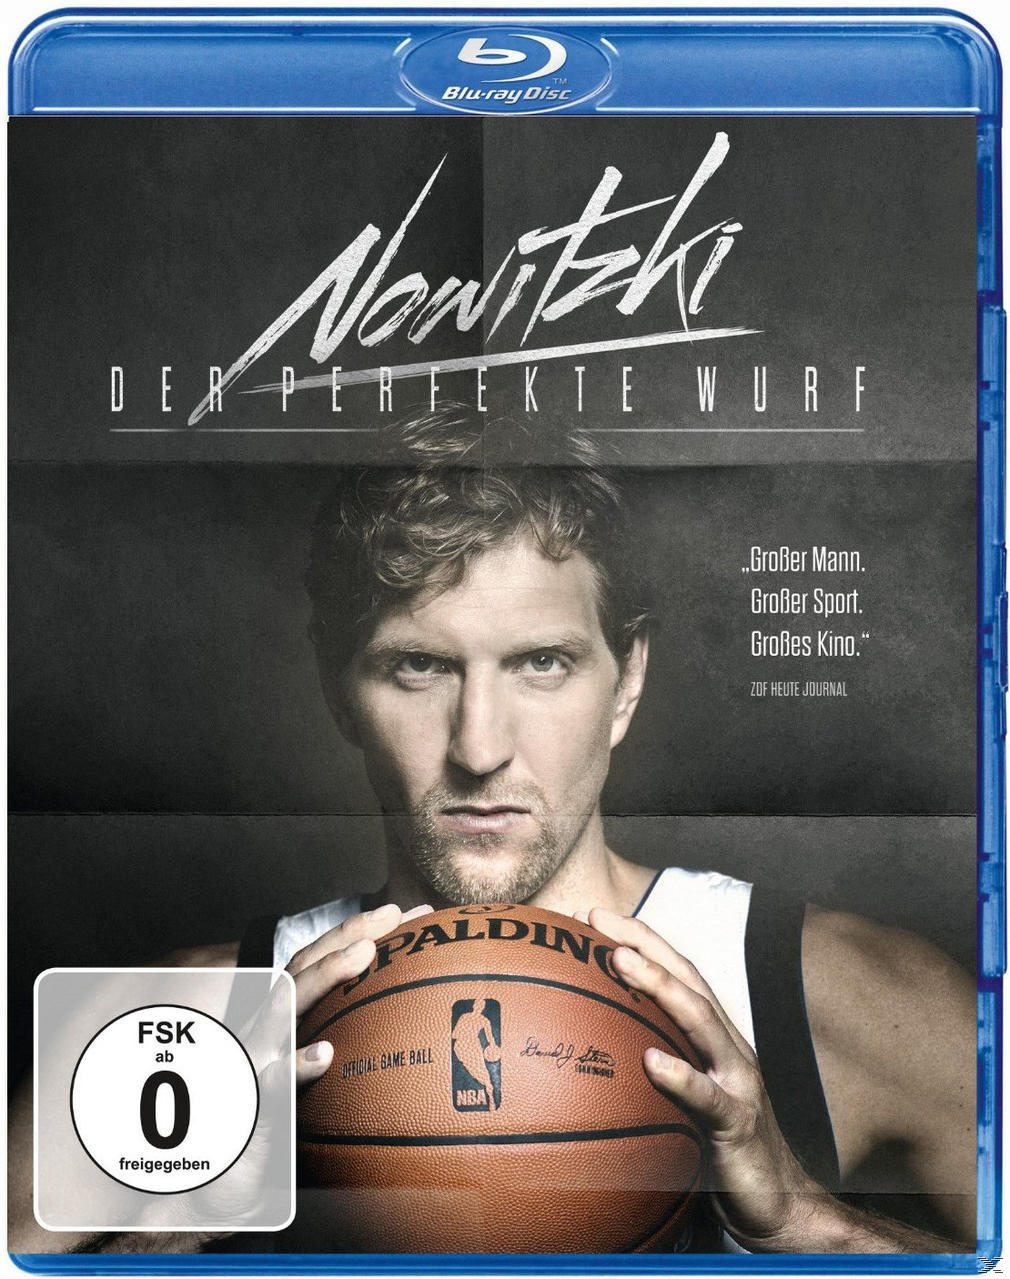 perfekte - Nowitzki Wurf Blu-ray Der